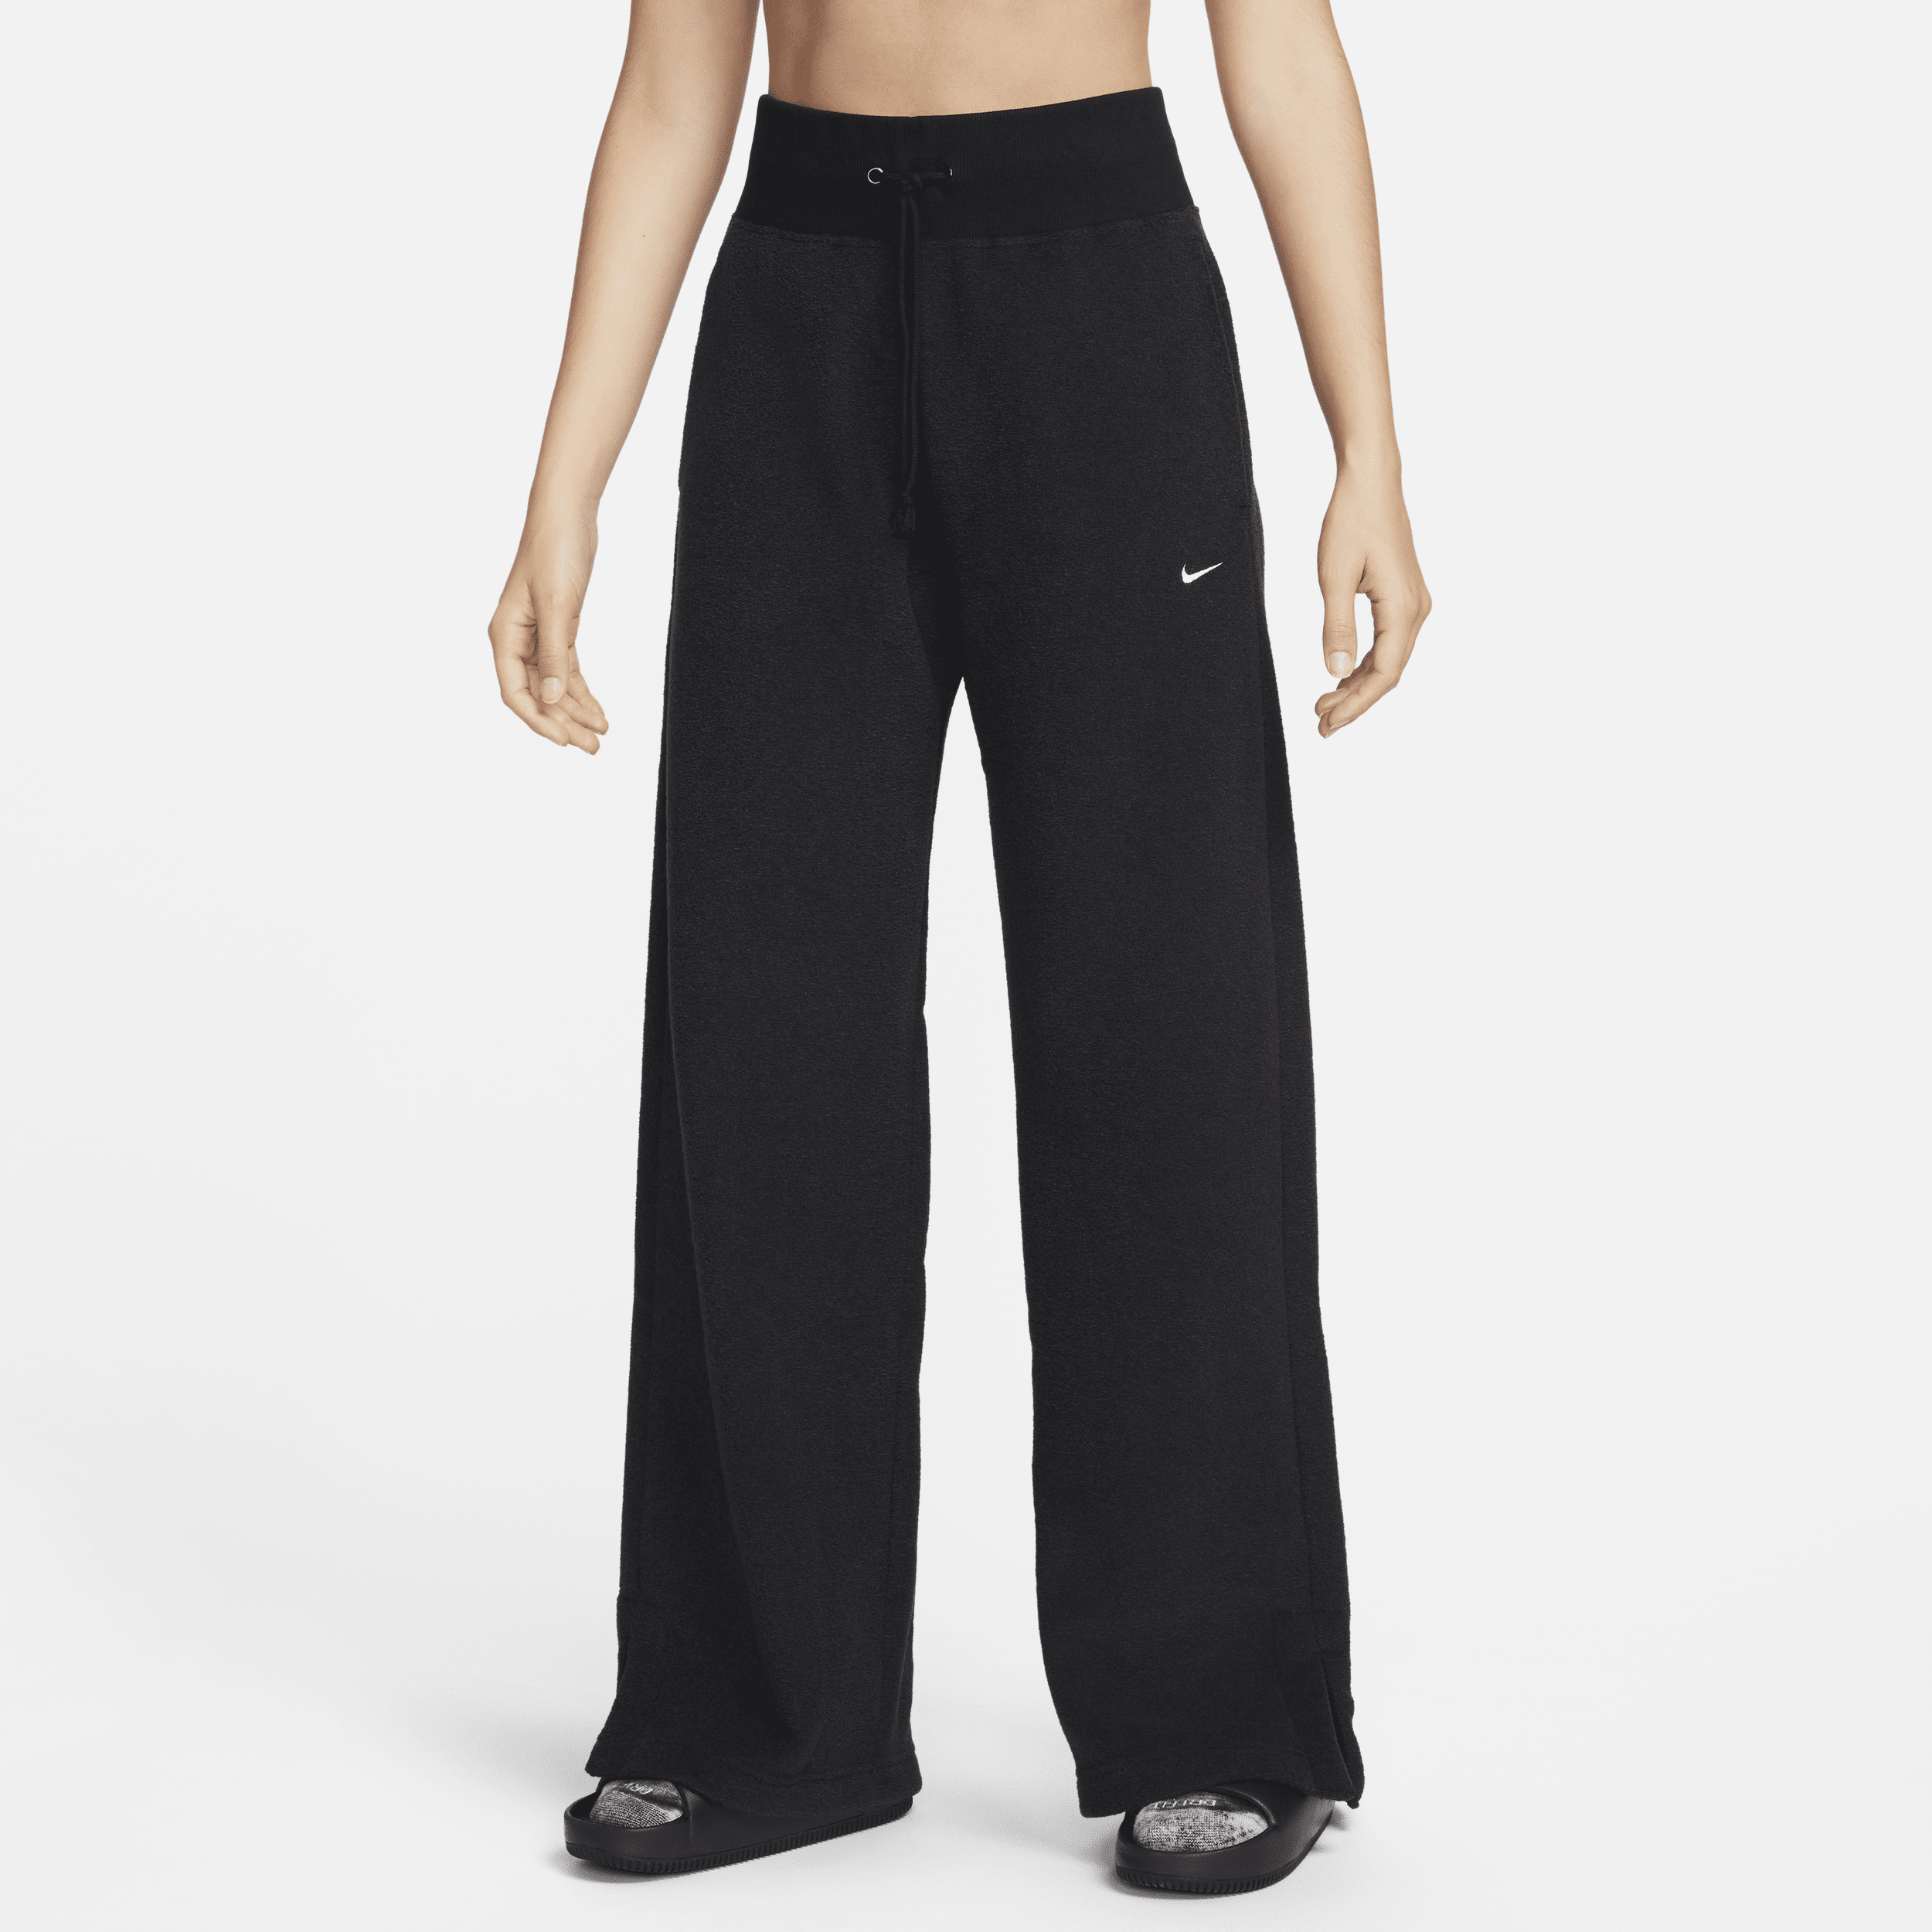 Pantaloni confortevoli in fleece a gamba larga e vita alta Nike Sportswear Phoenix Plush – Donna - Nero